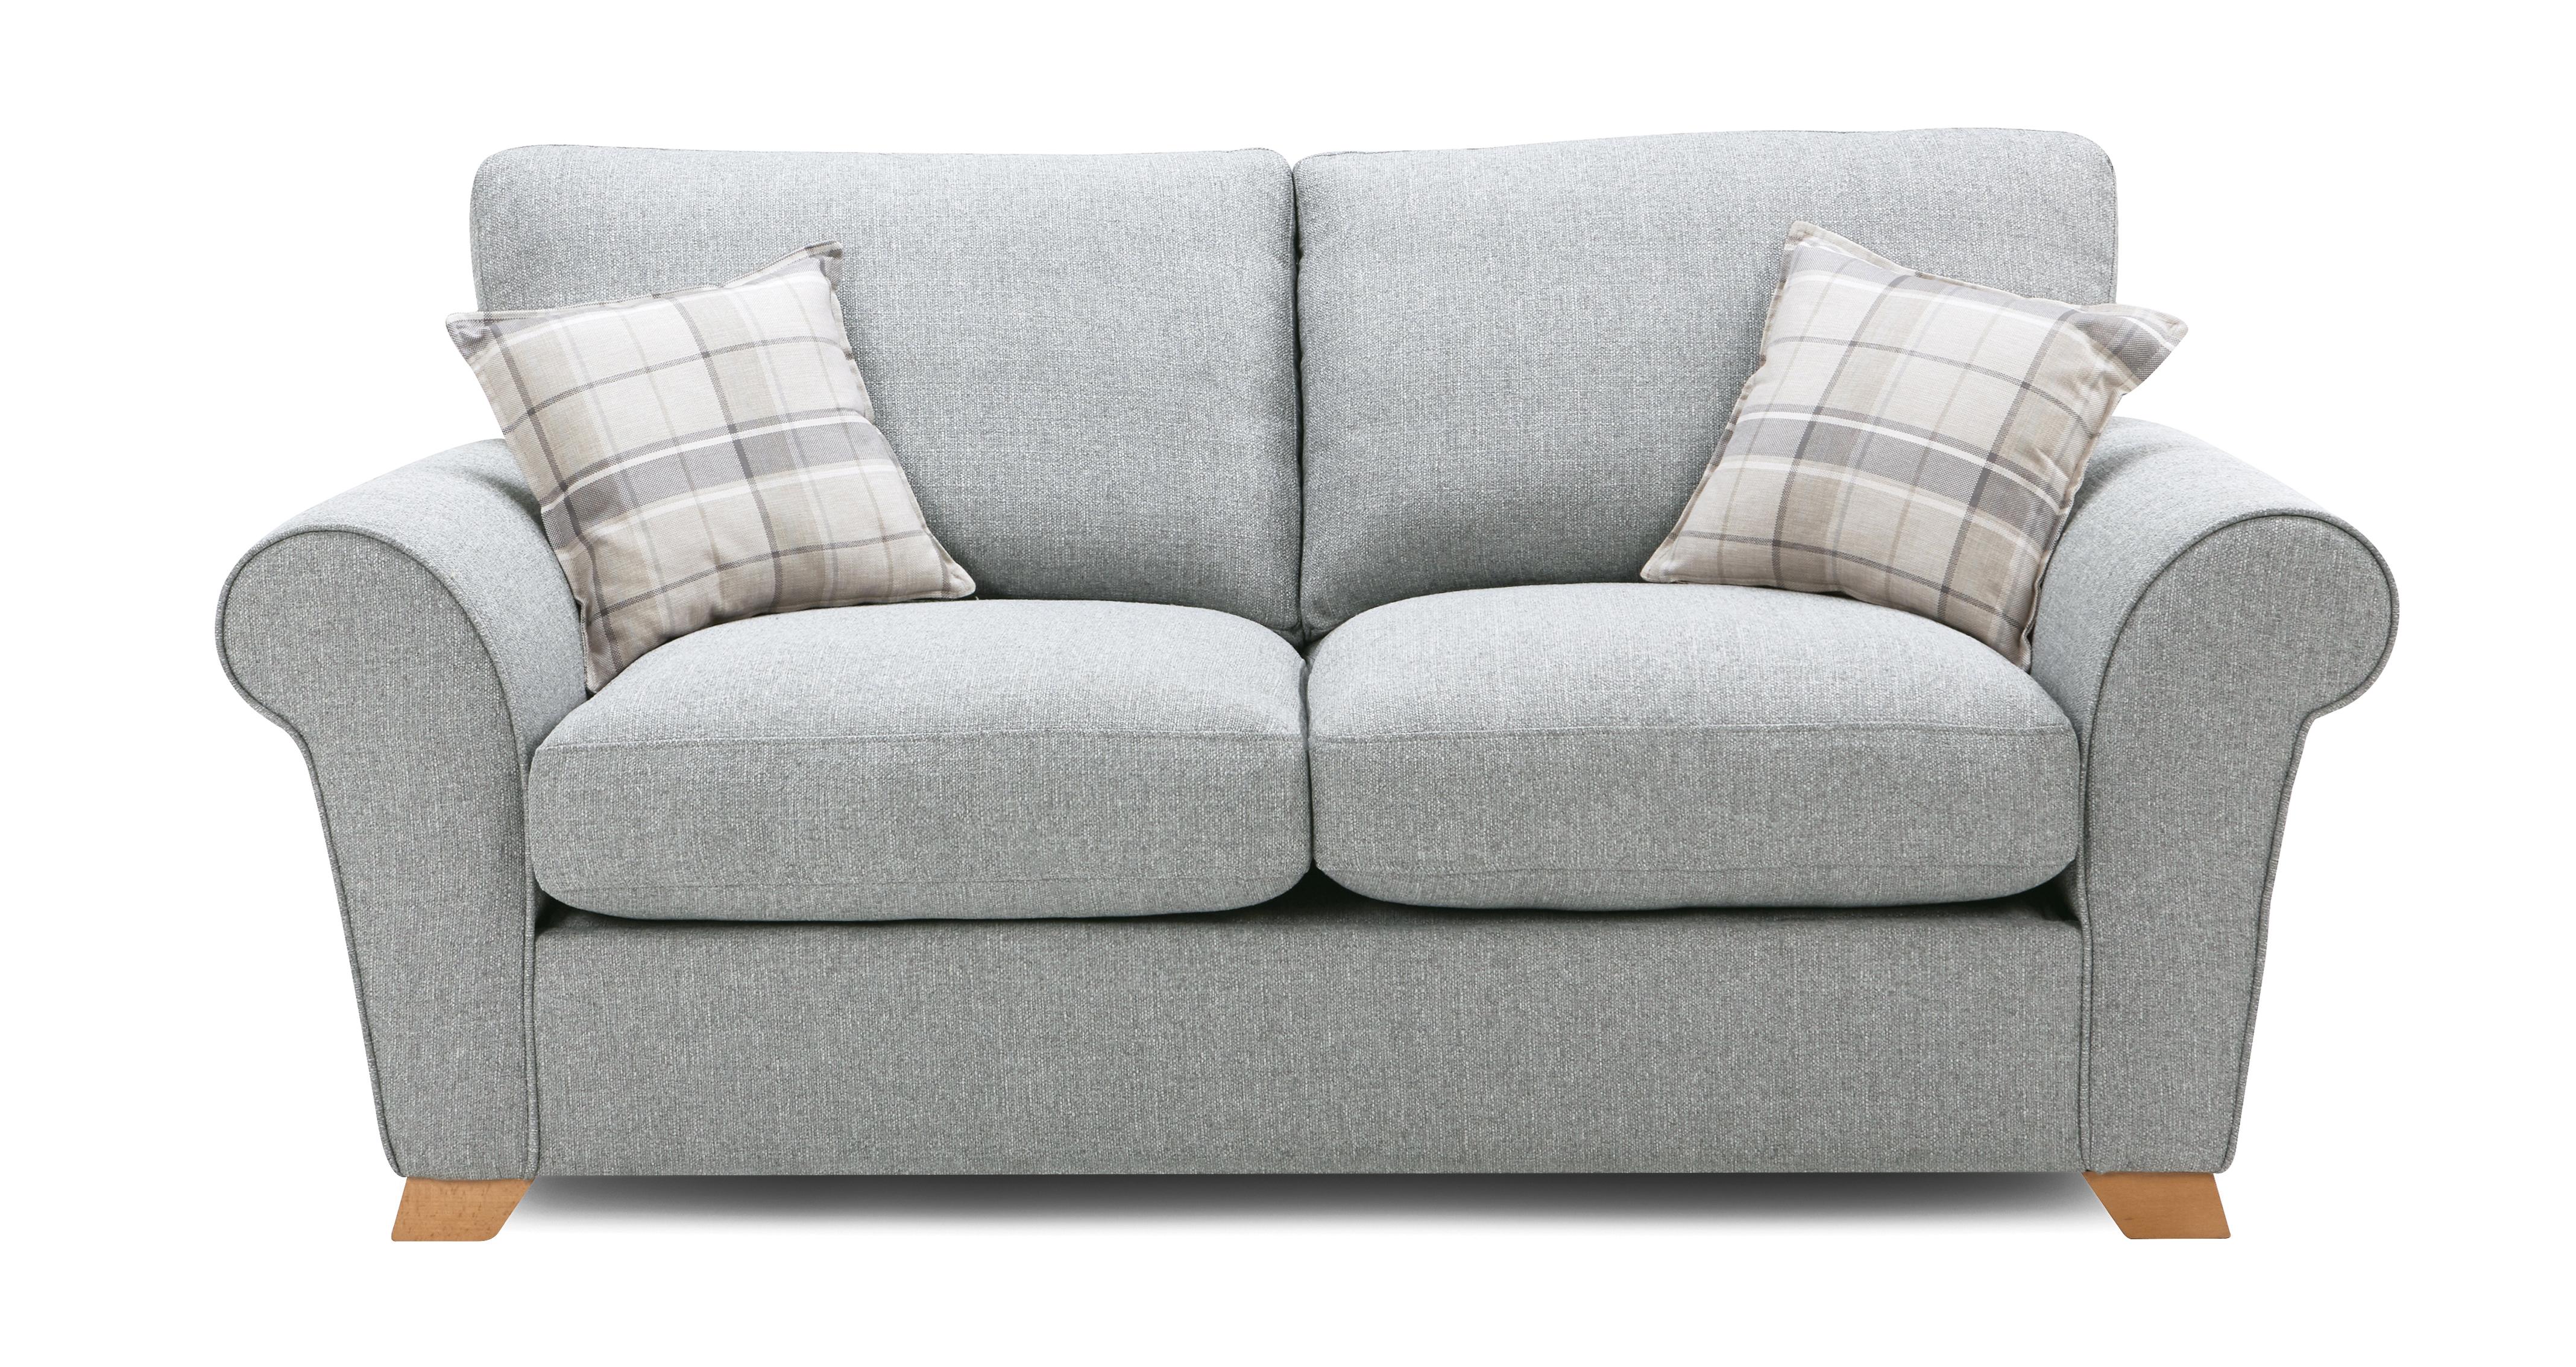 single sofa beds dfs